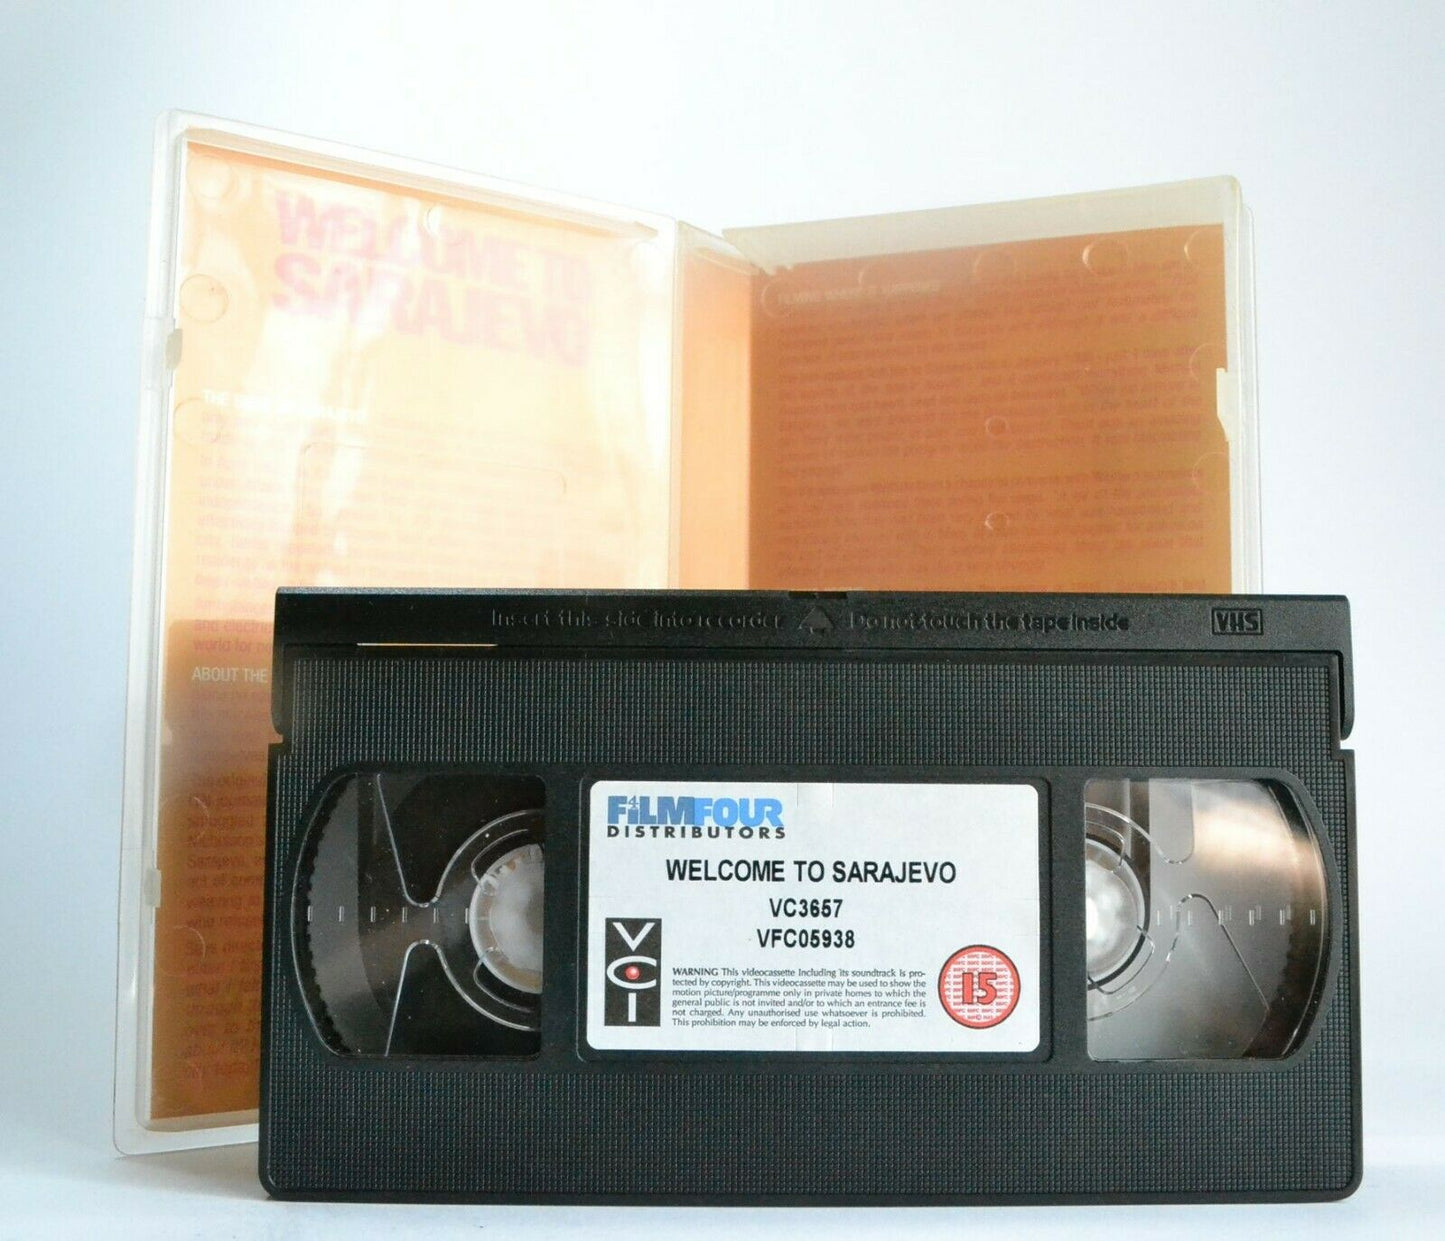 Welcome to Sarajevo: British War Film (1997) Natasha's Story - W.Harrelson - VHS-